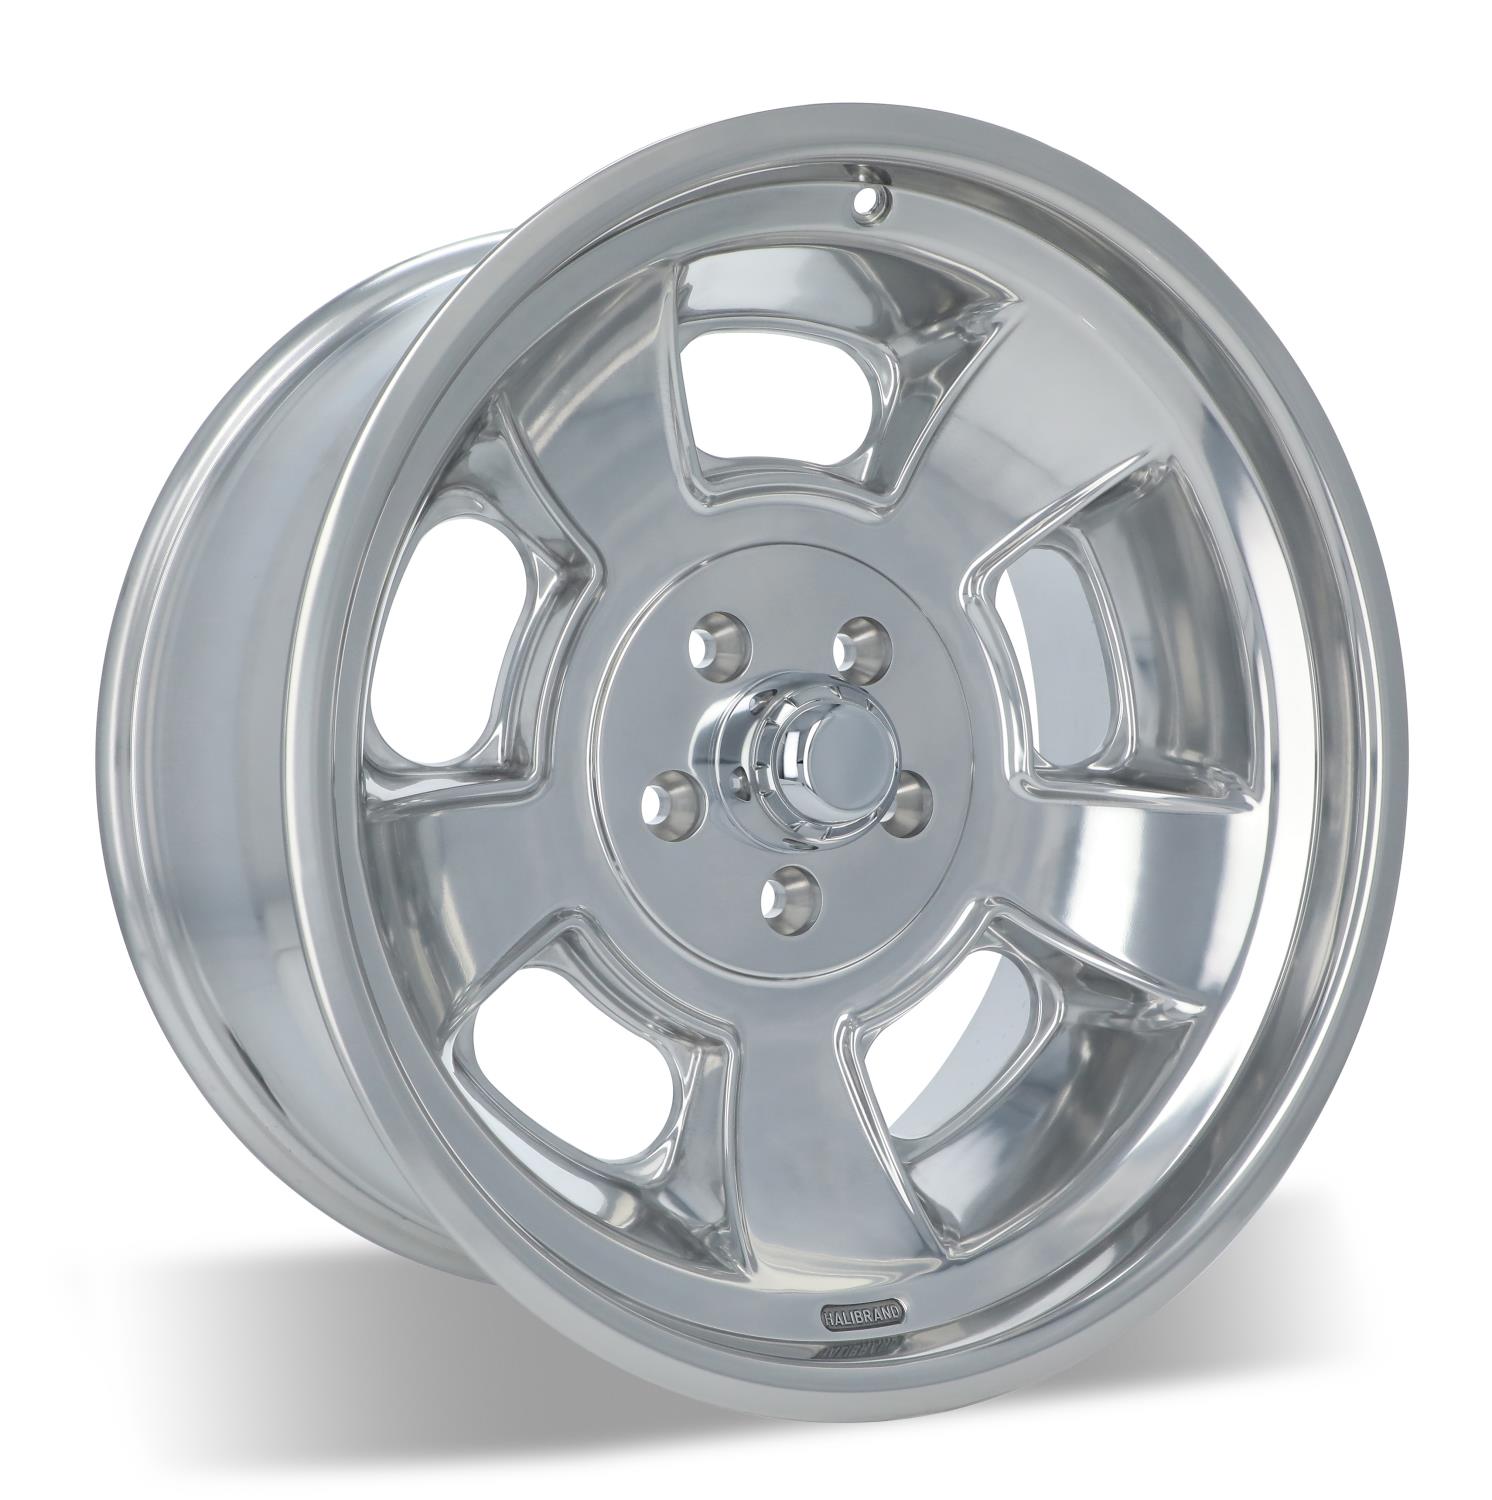 Sprint Rear Wheel, Size: 20x10", Bolt Pattern: 5x5", Backspace: 5.5" [Polished - Gloss Clearcoat]